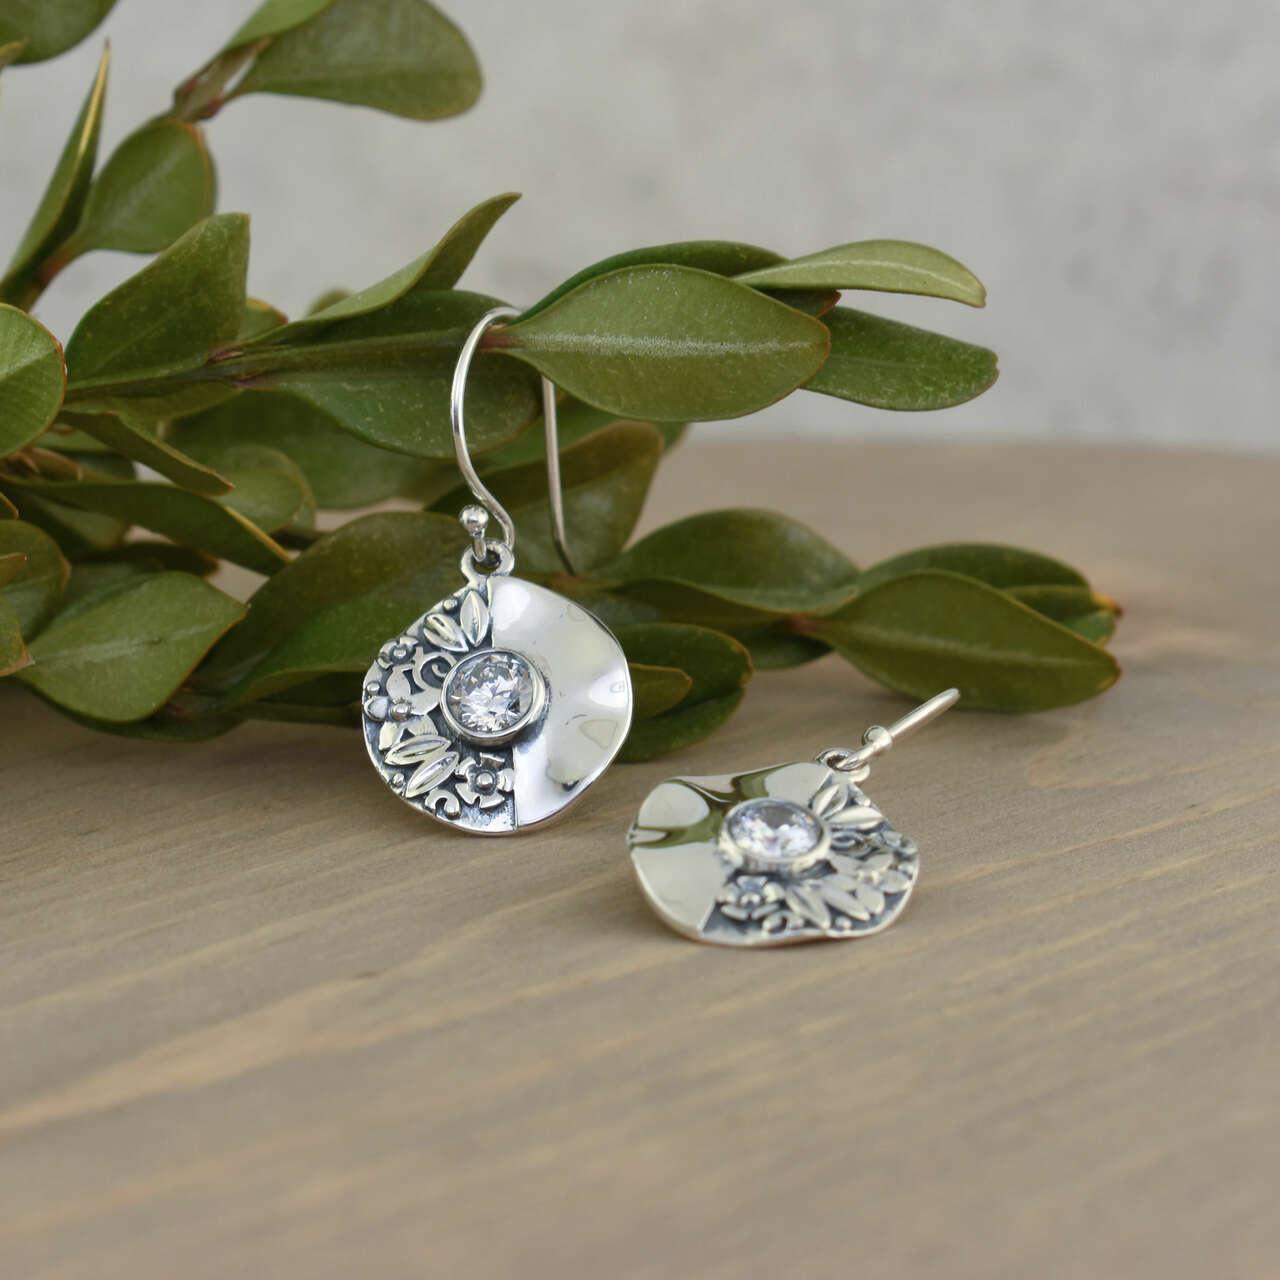 Designer sterling silver earrings with bling cz